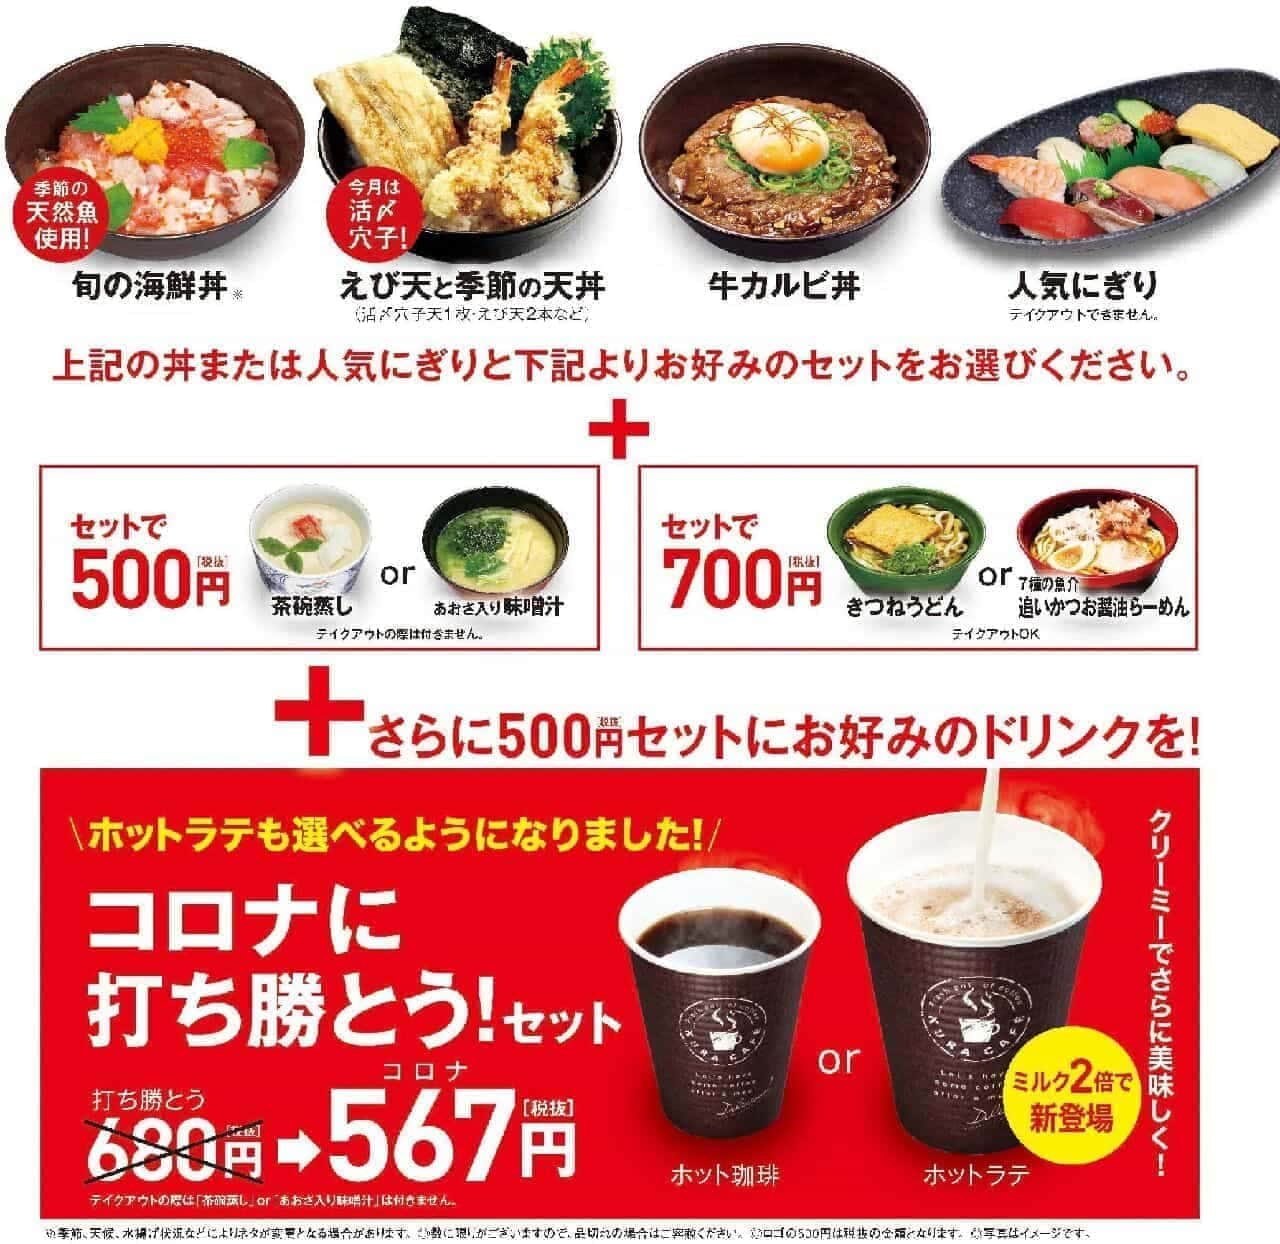 Kura Sushi "Energize Japan!" Campaign 2nd